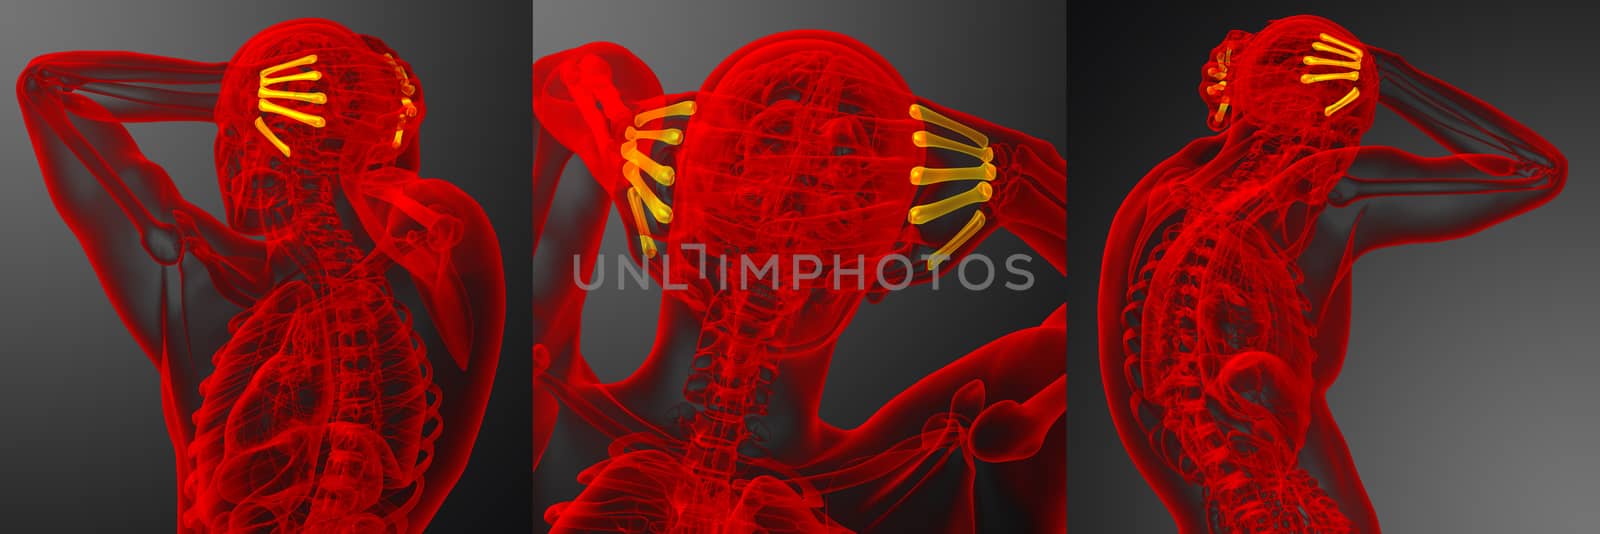 3d rendering medical illustration of the metacarpal bone by maya2008